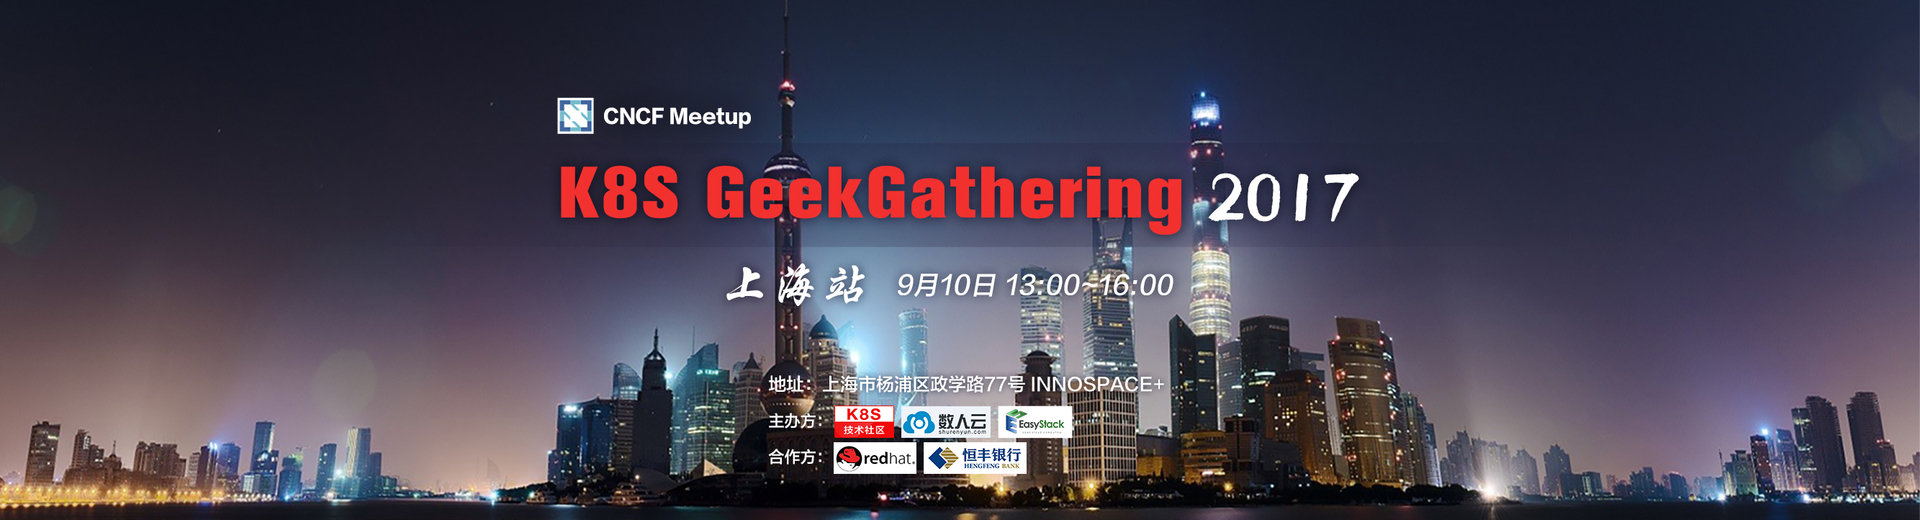 【9.10】K8S GeekGathering上海站